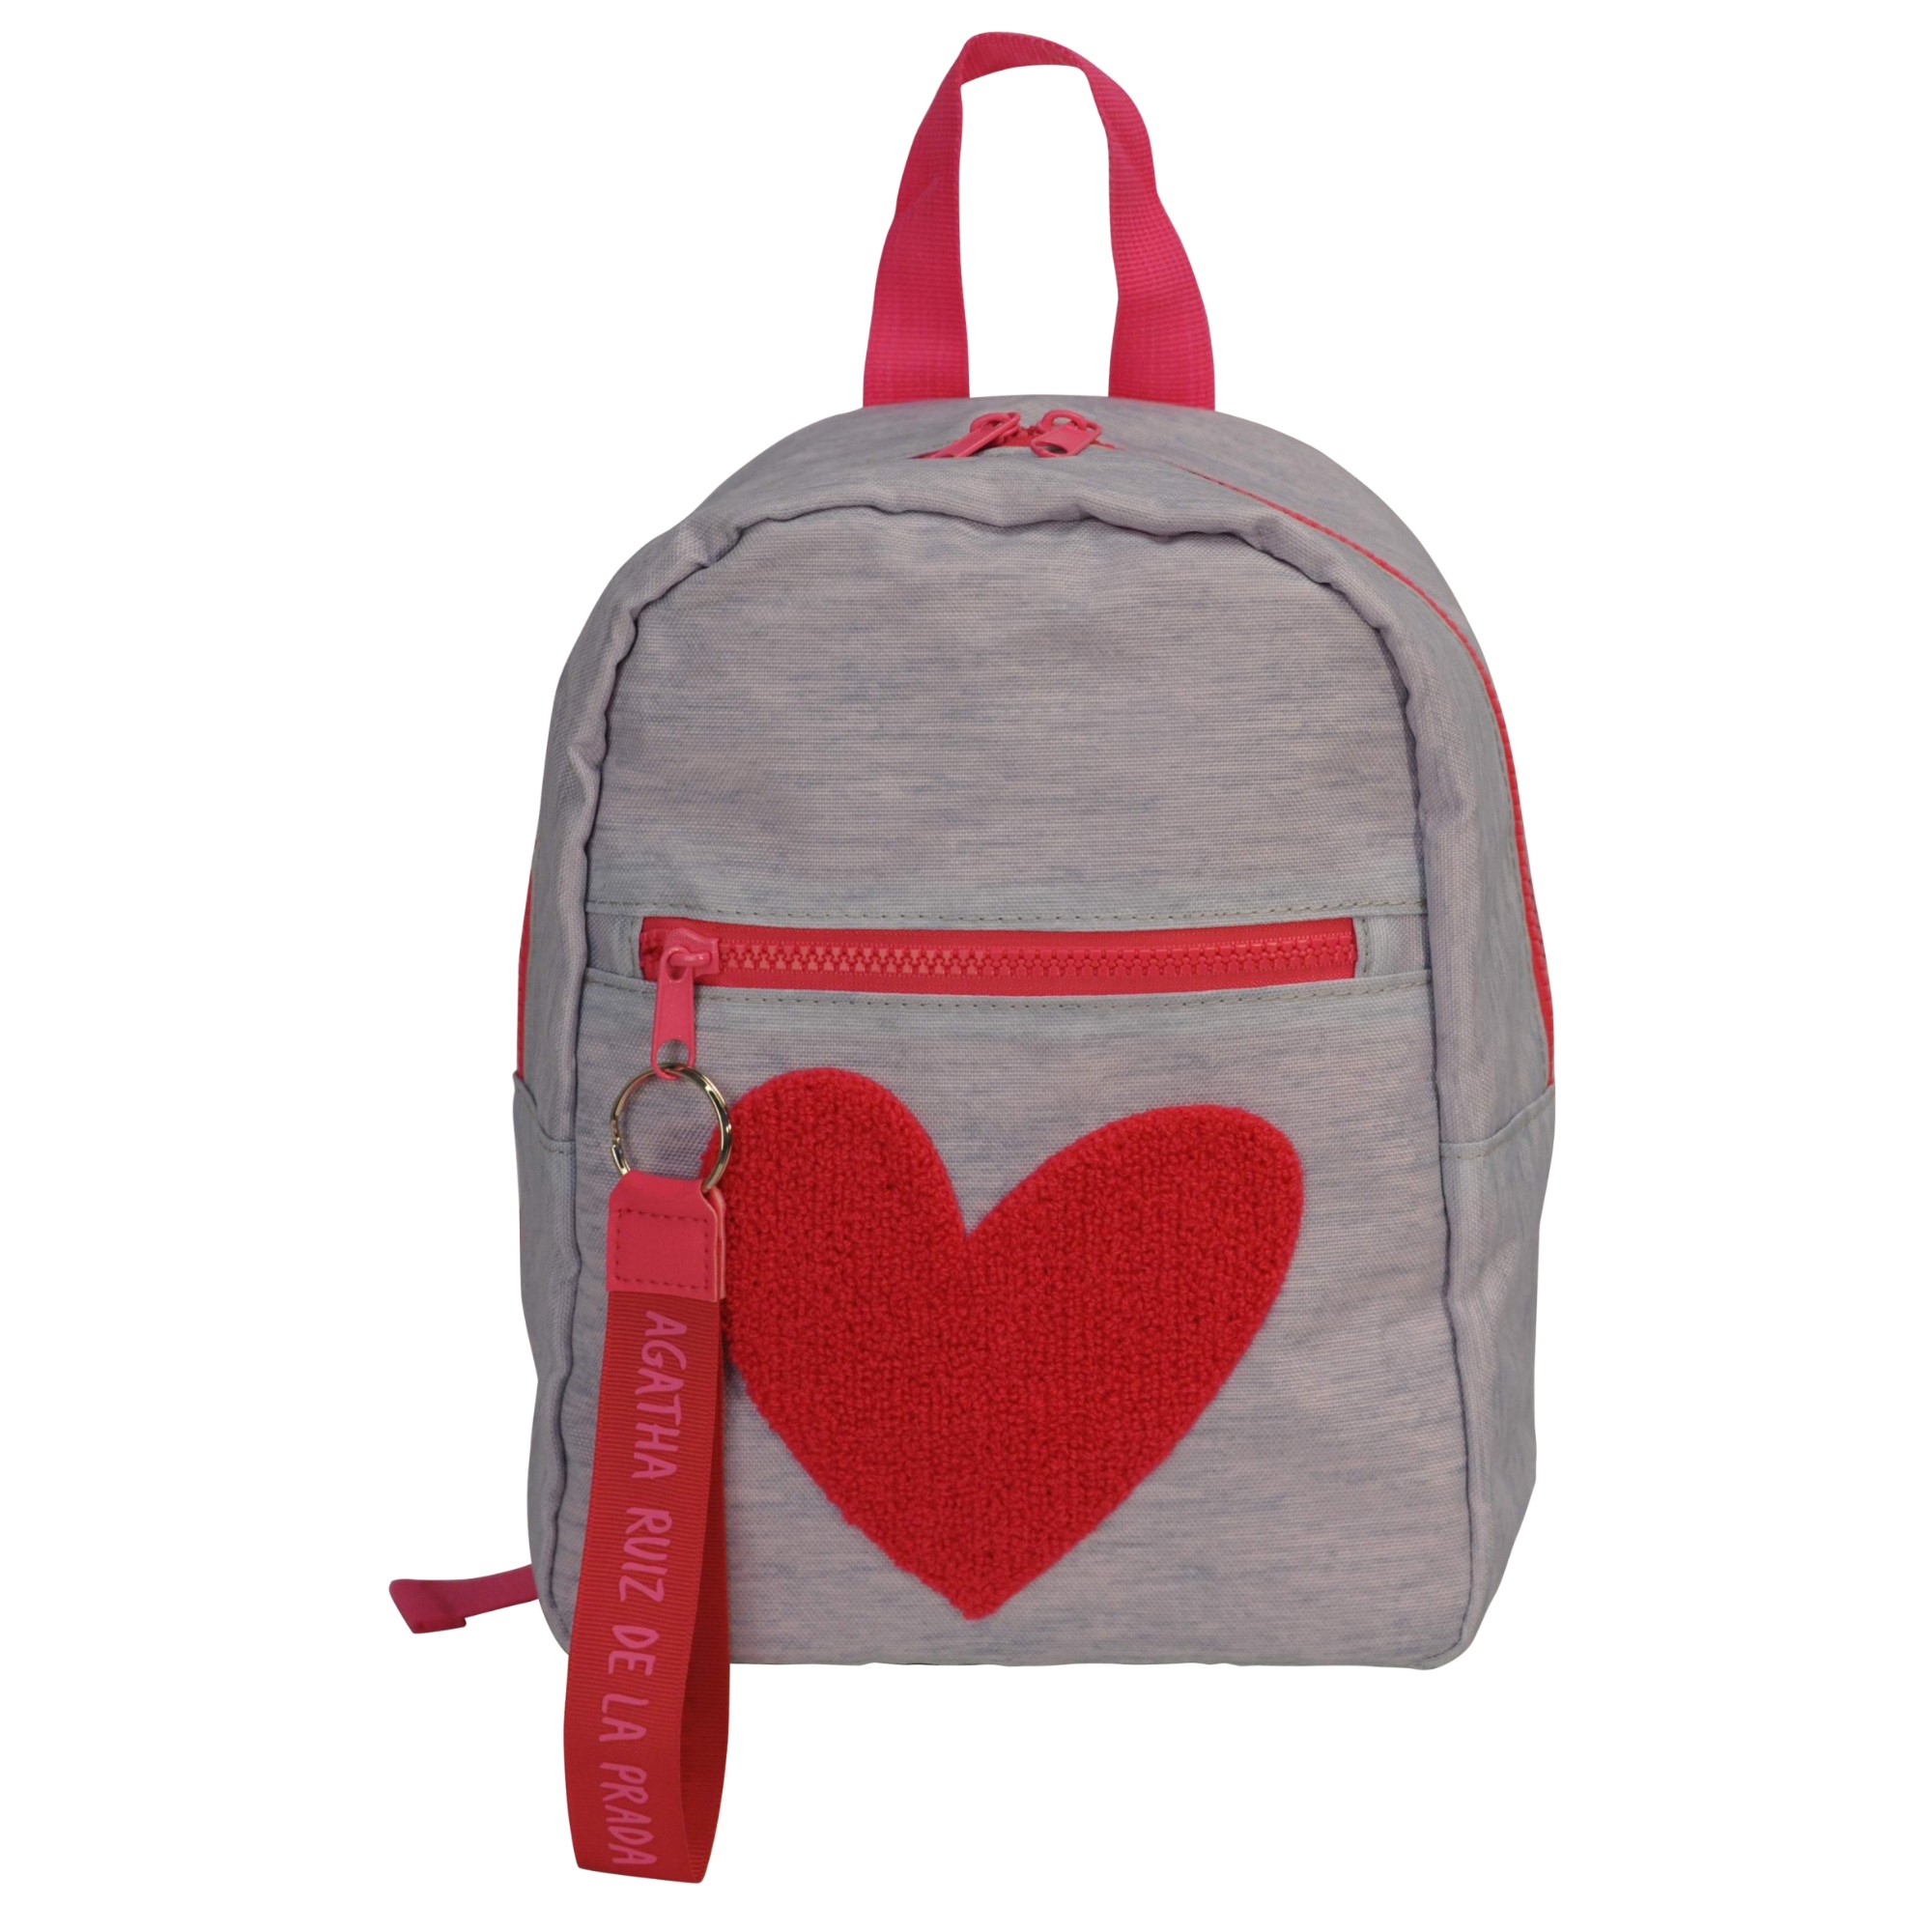 Mini mochila OEM Monedero de Nylon Purse Fashion College Bag |Daypack con bordado en forma de corazón.